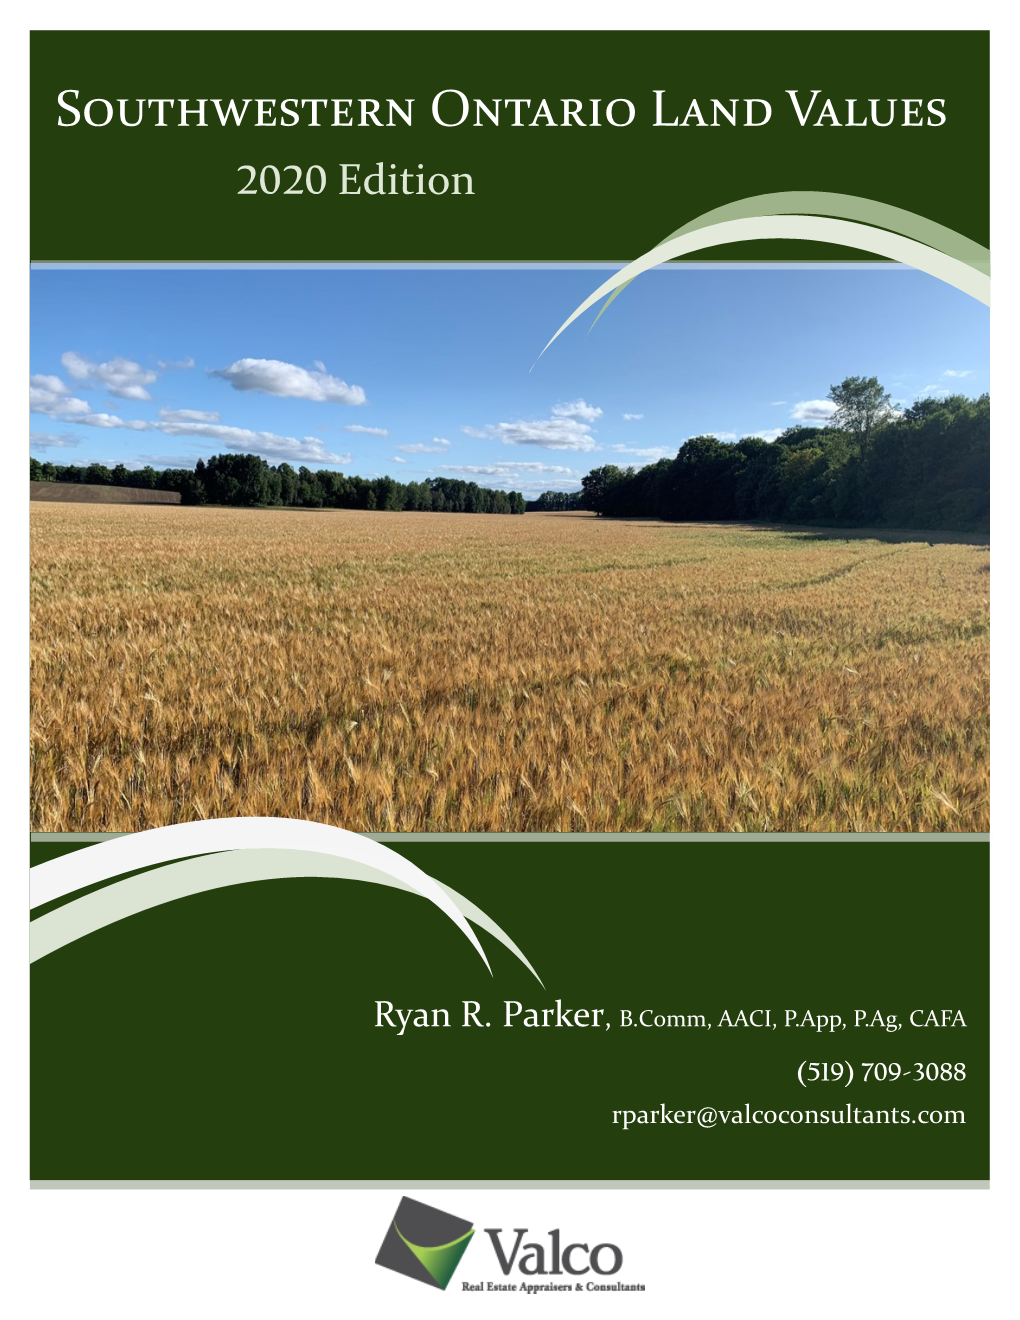 Southwestern Ontario Land Values 2020 Edition